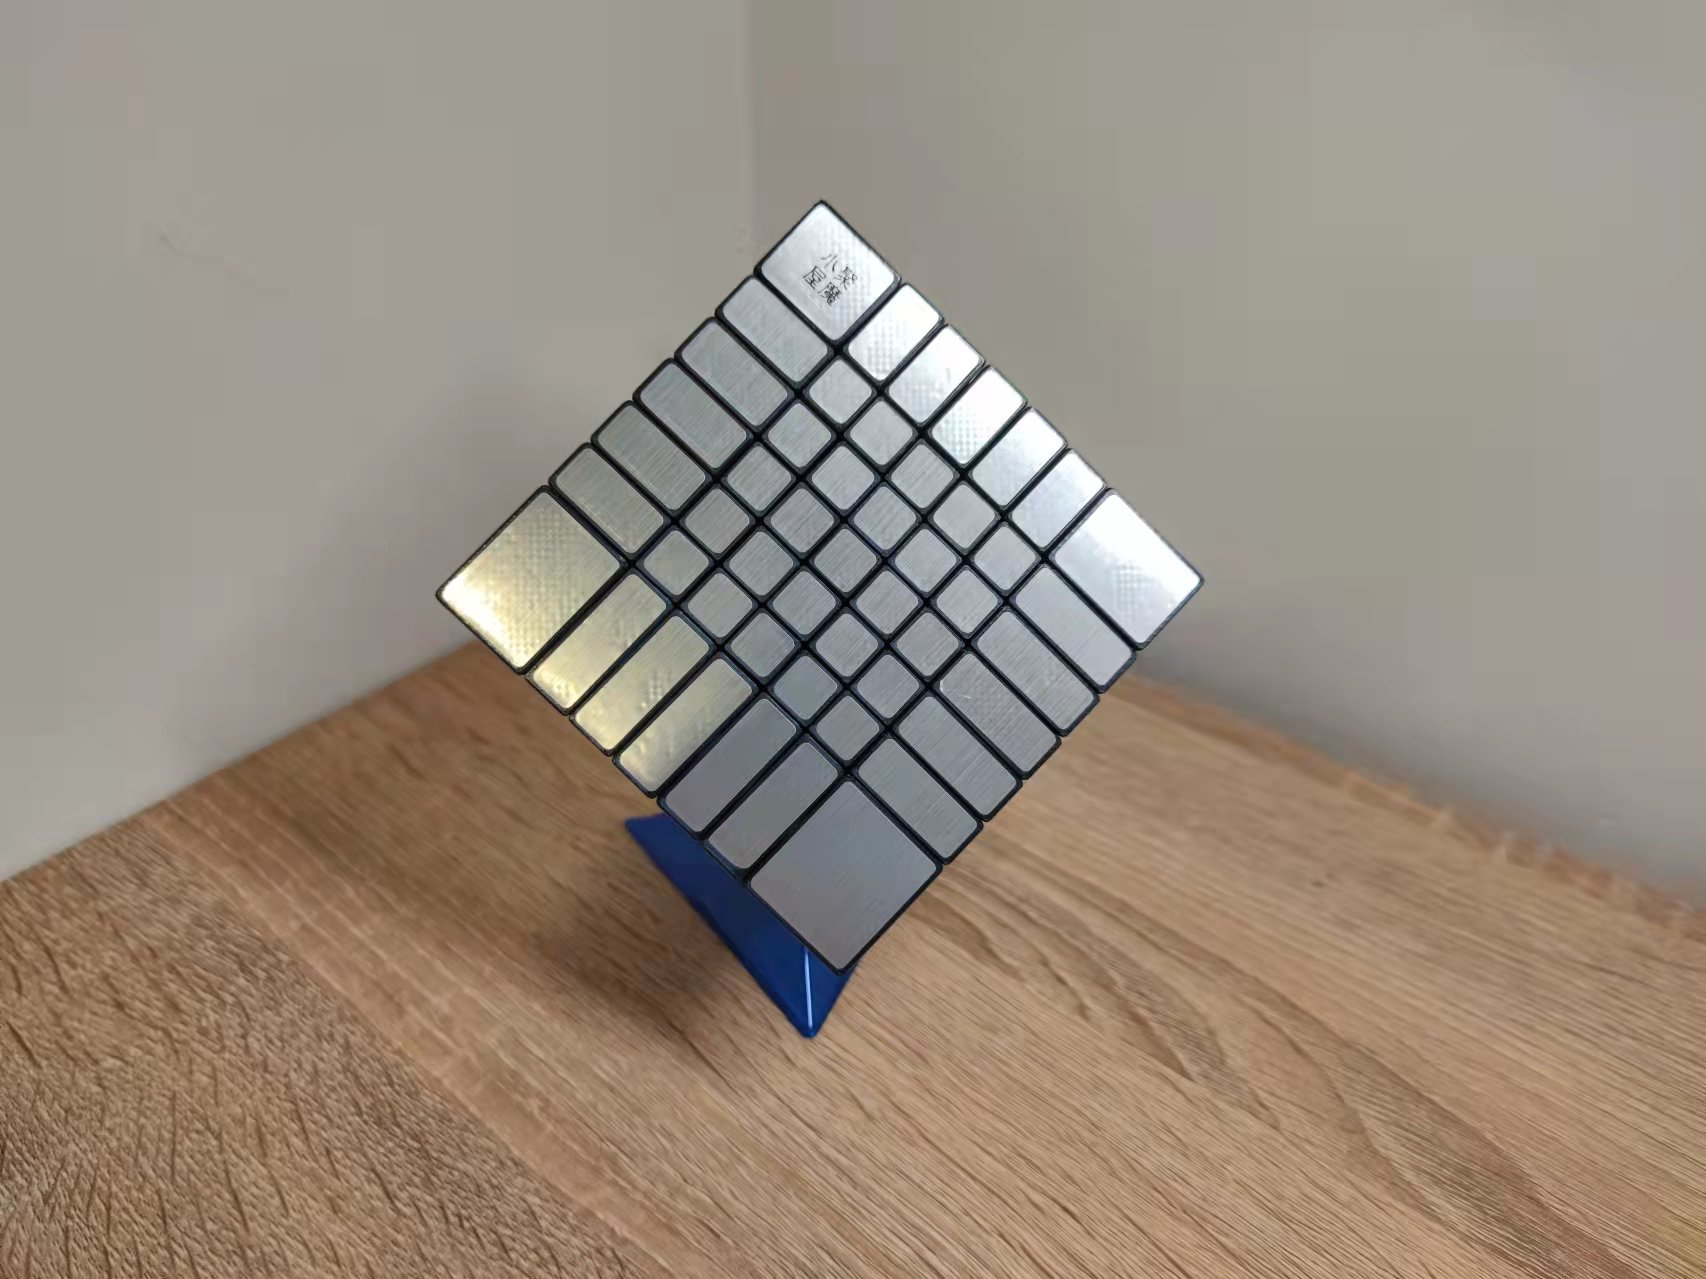 3D Printed 7x7 Mirror Speed Cube (Black&Silver)